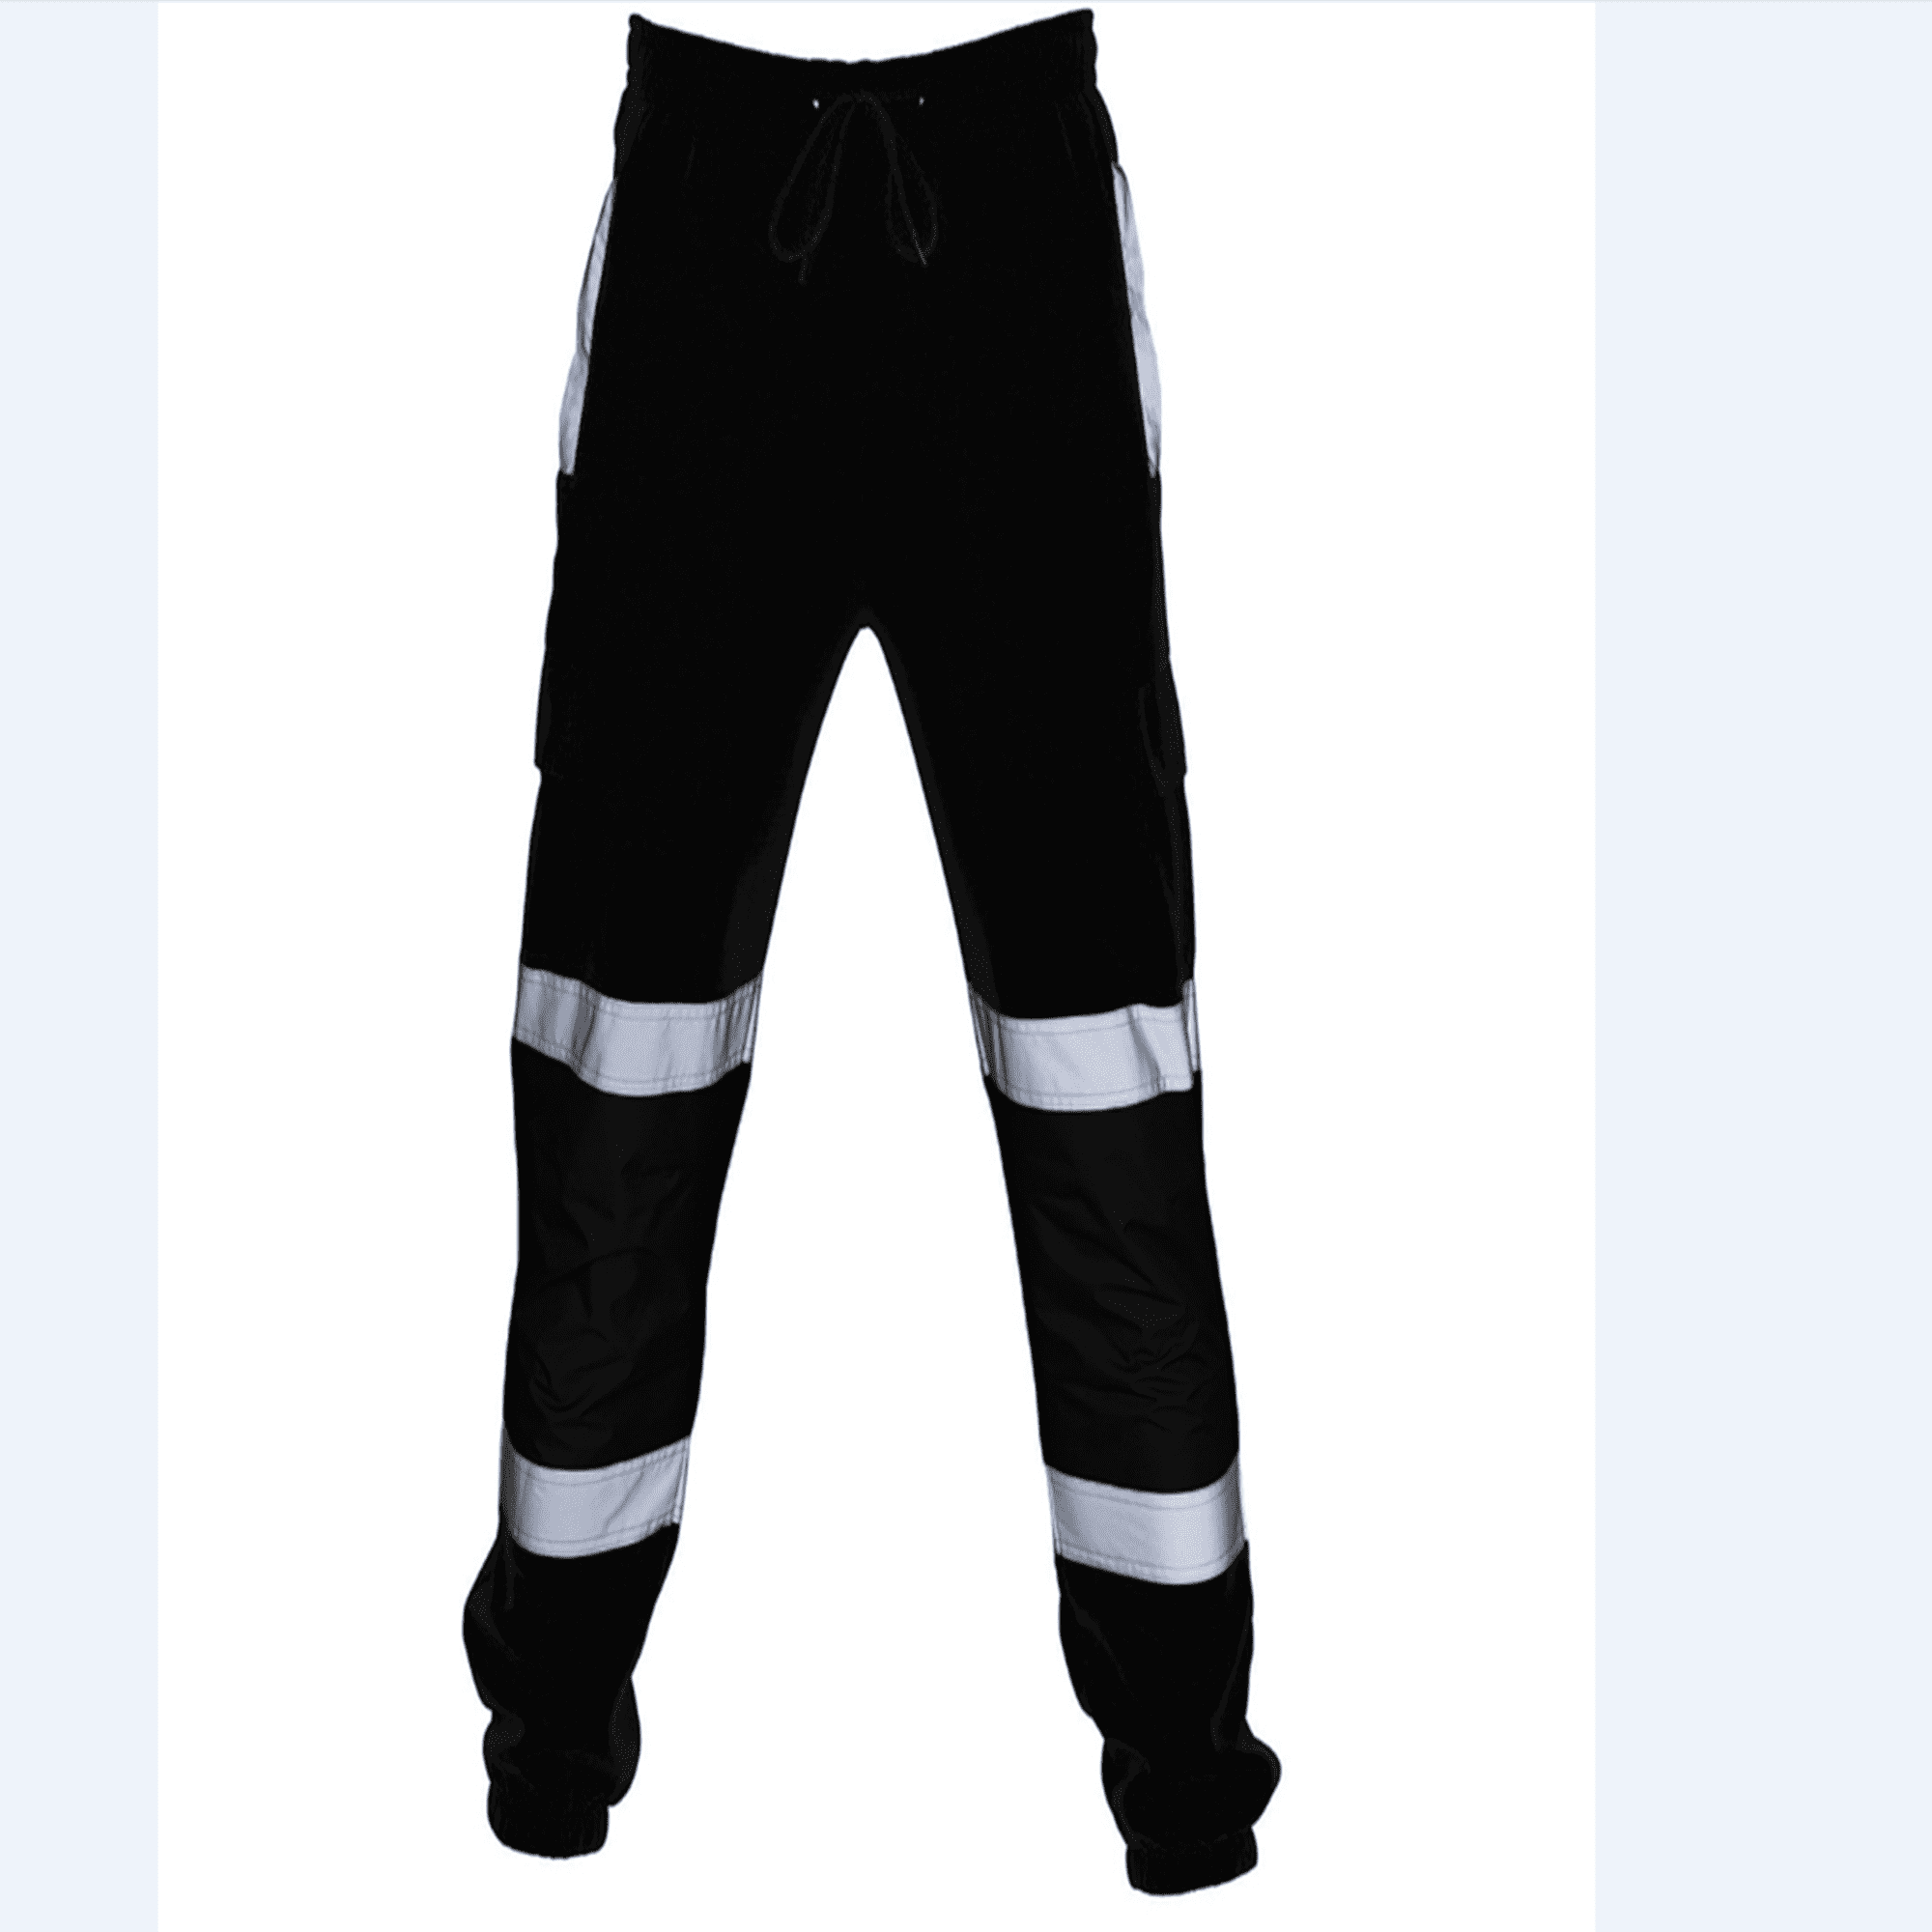 Details about   Men Hi Viz Vis High Visibility Work Sweatpants Reflective Tape Safety TrousersA 